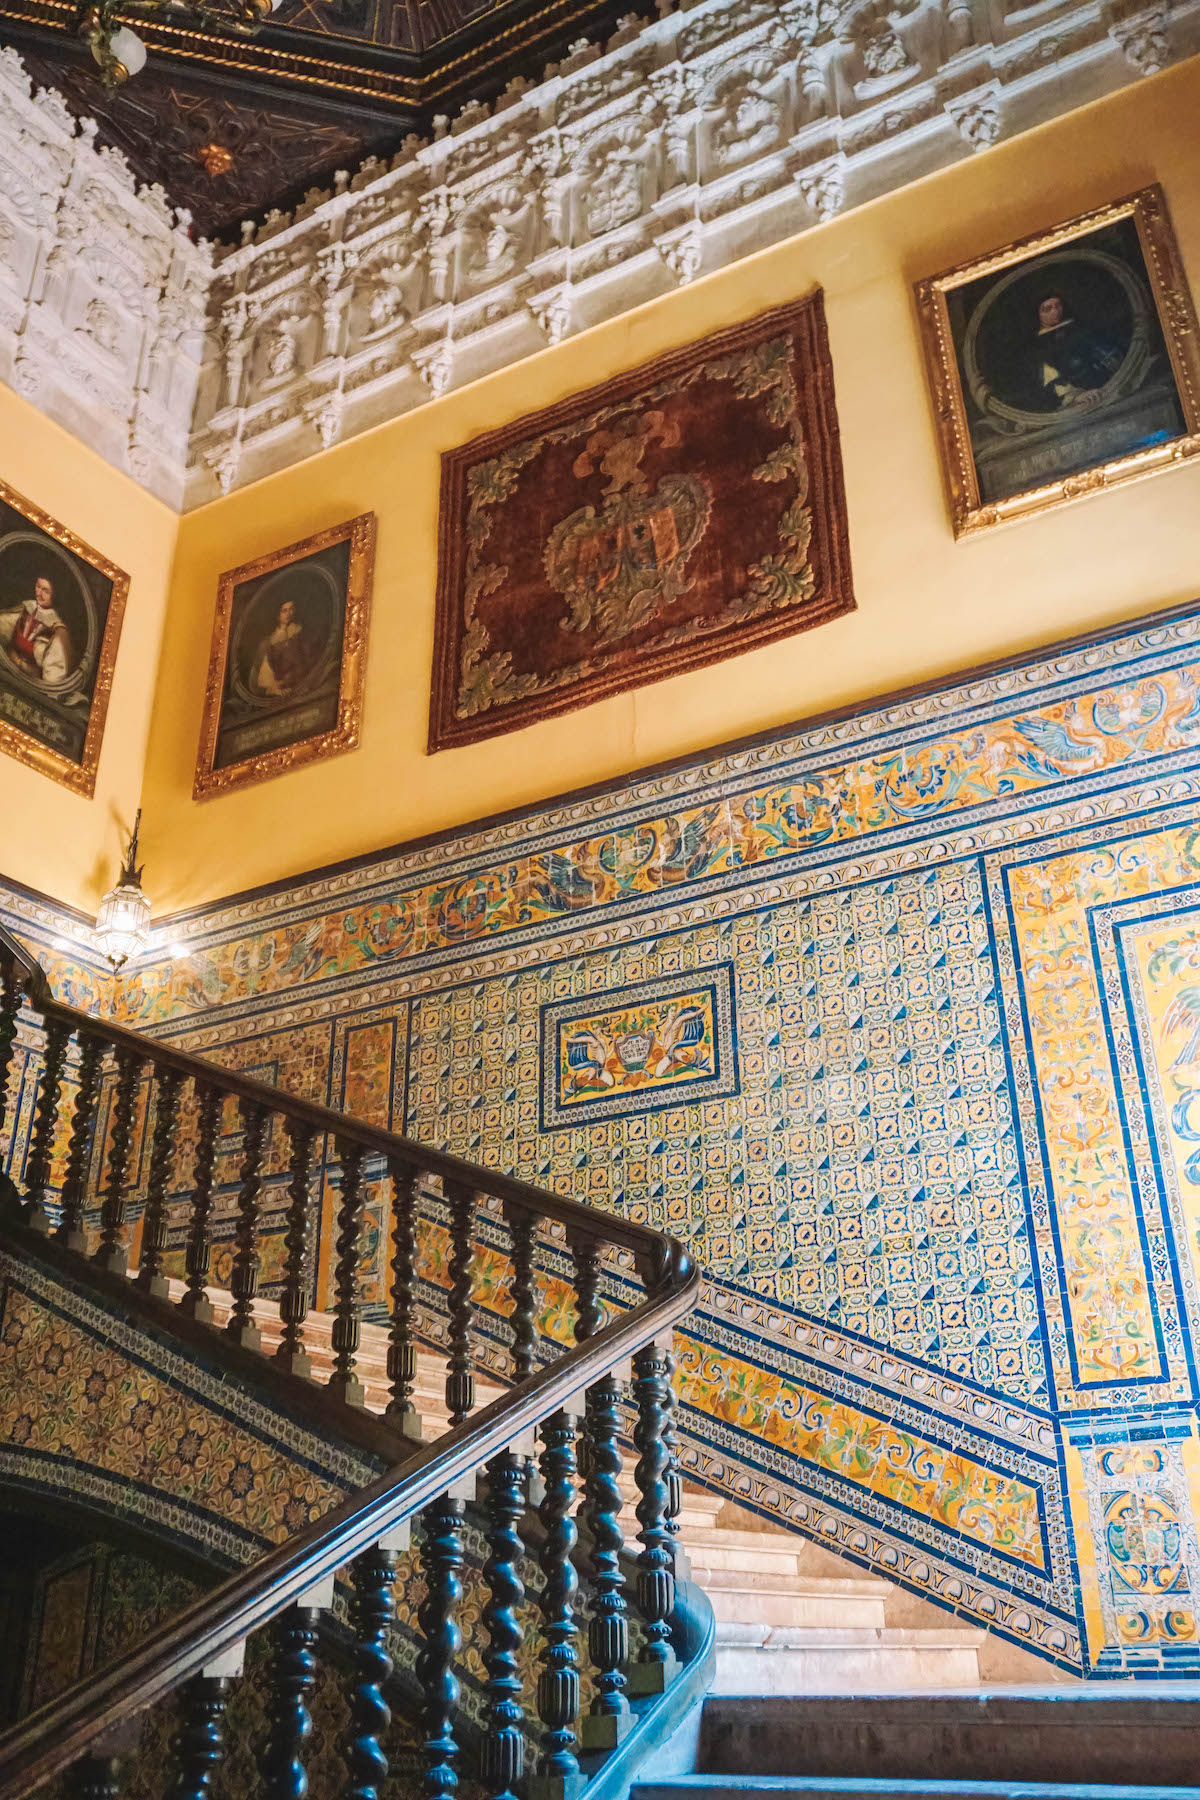 Tiled staircase inside the Palacio de Lebrija in Seville, Spain.